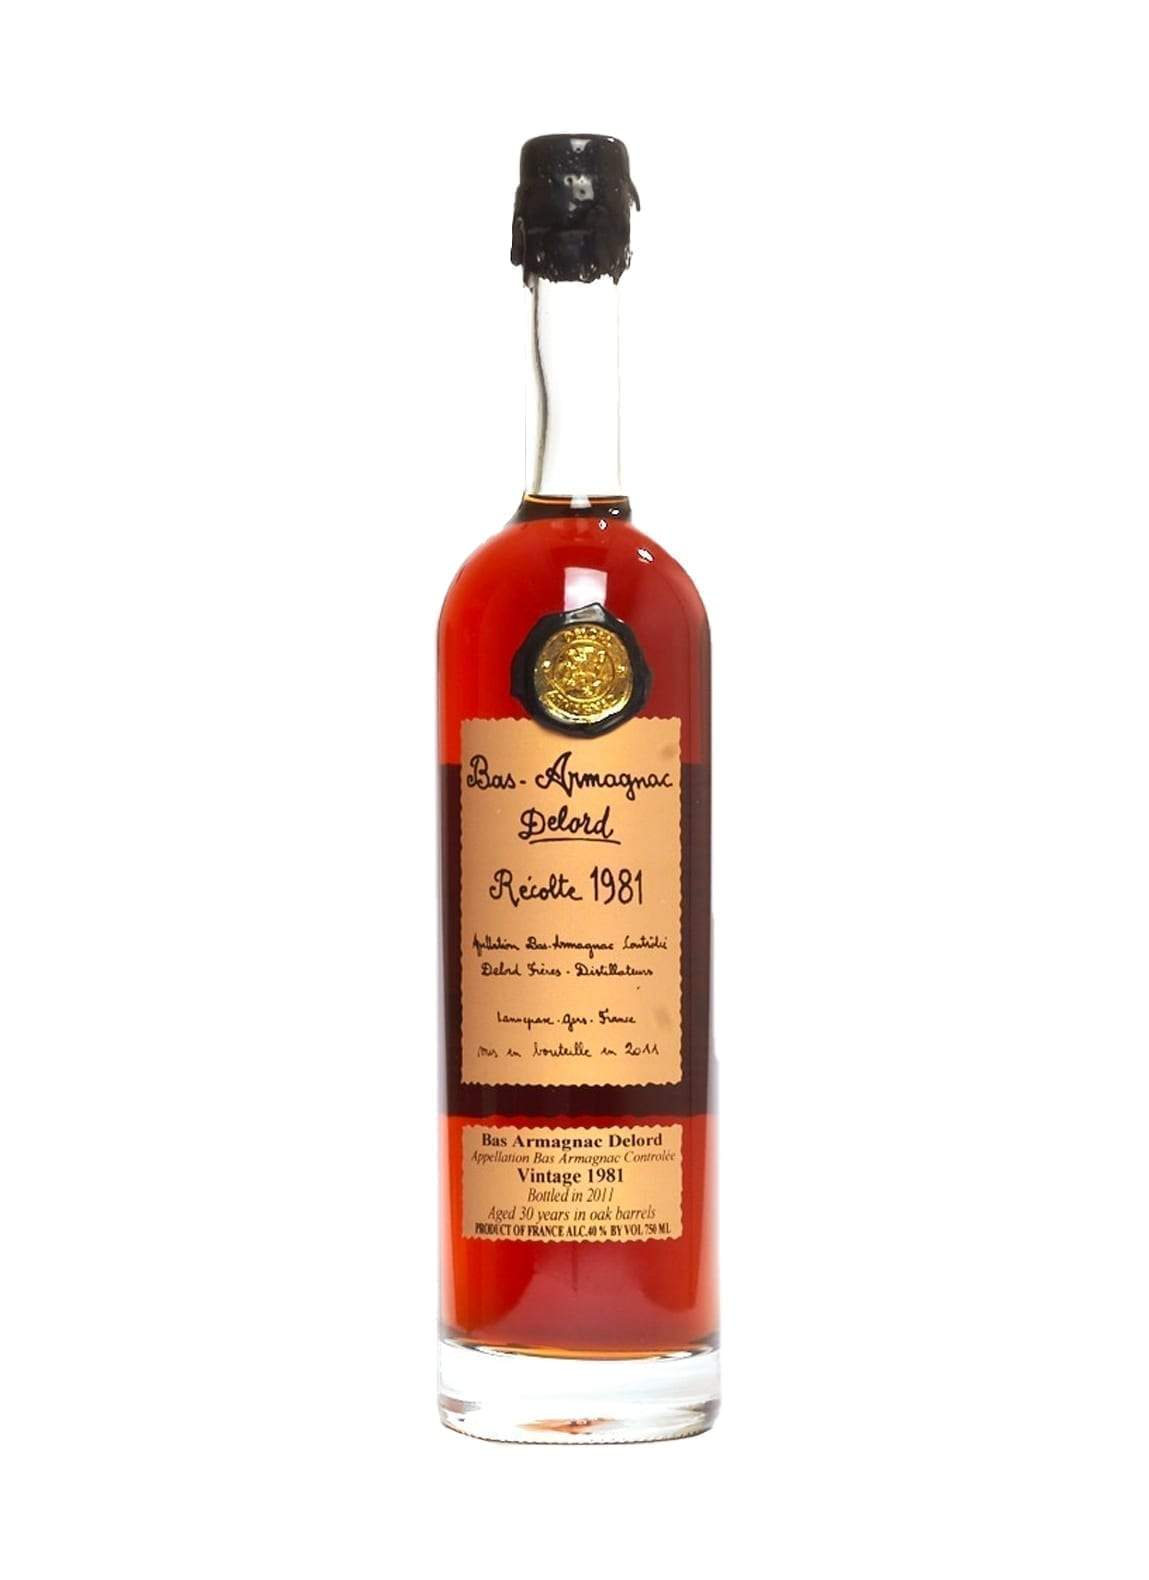 Delord 1981 Bas Armagnac 40% 700ml | Brandy | Shop online at Spirits of France